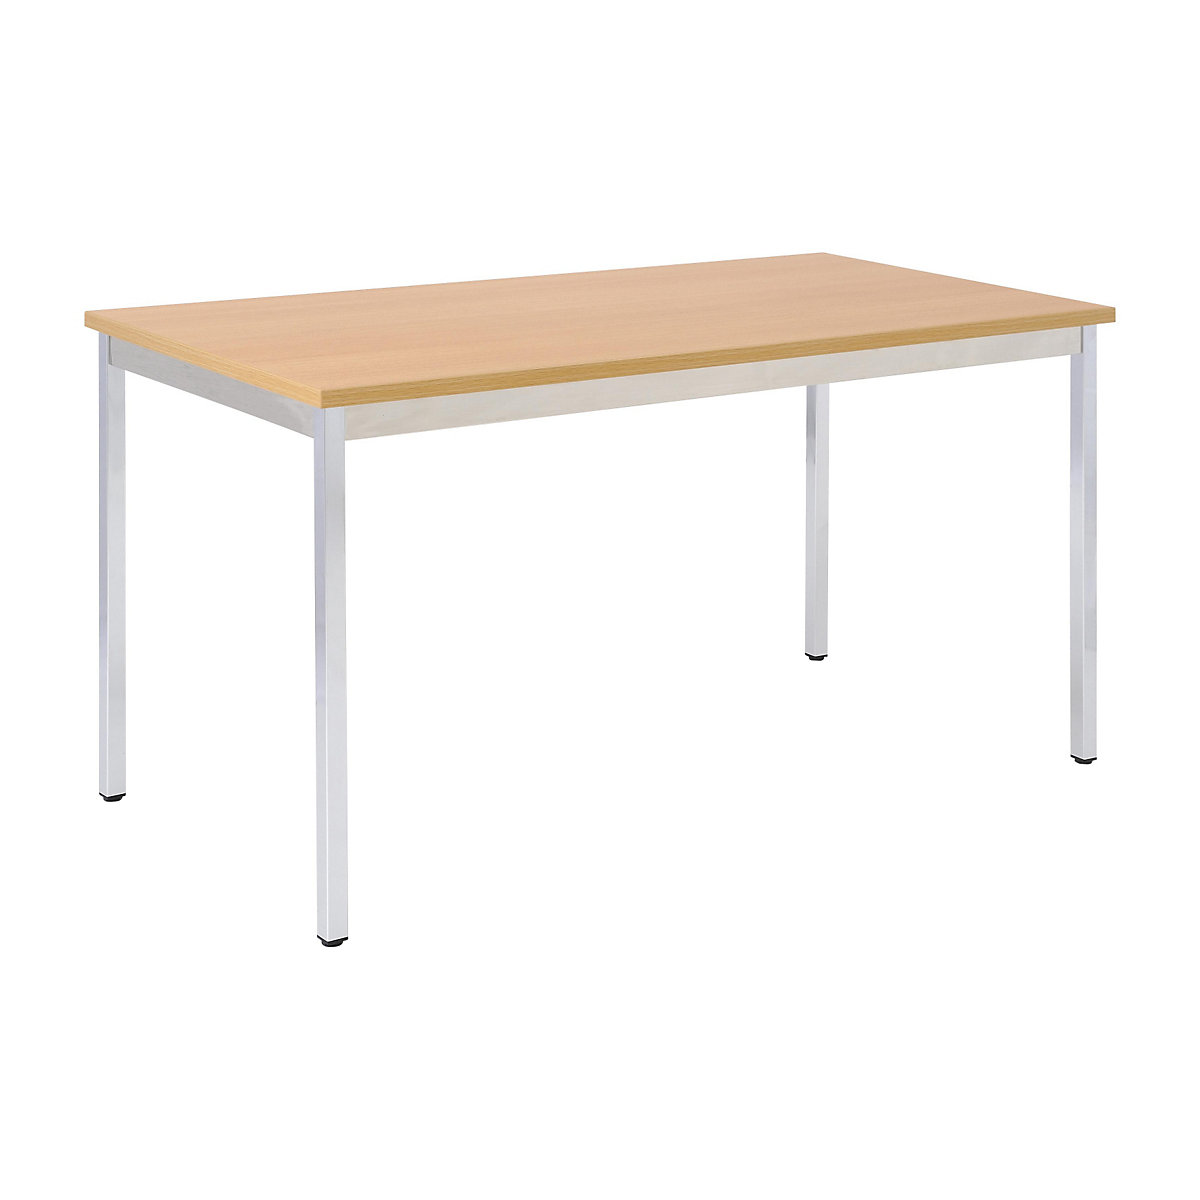 Universele tafel – eurokraft basic, rechthoekig, h x b x d = 740 x 700 x 600 mm, blad beukenhoutdecor, frame verchroomd-14